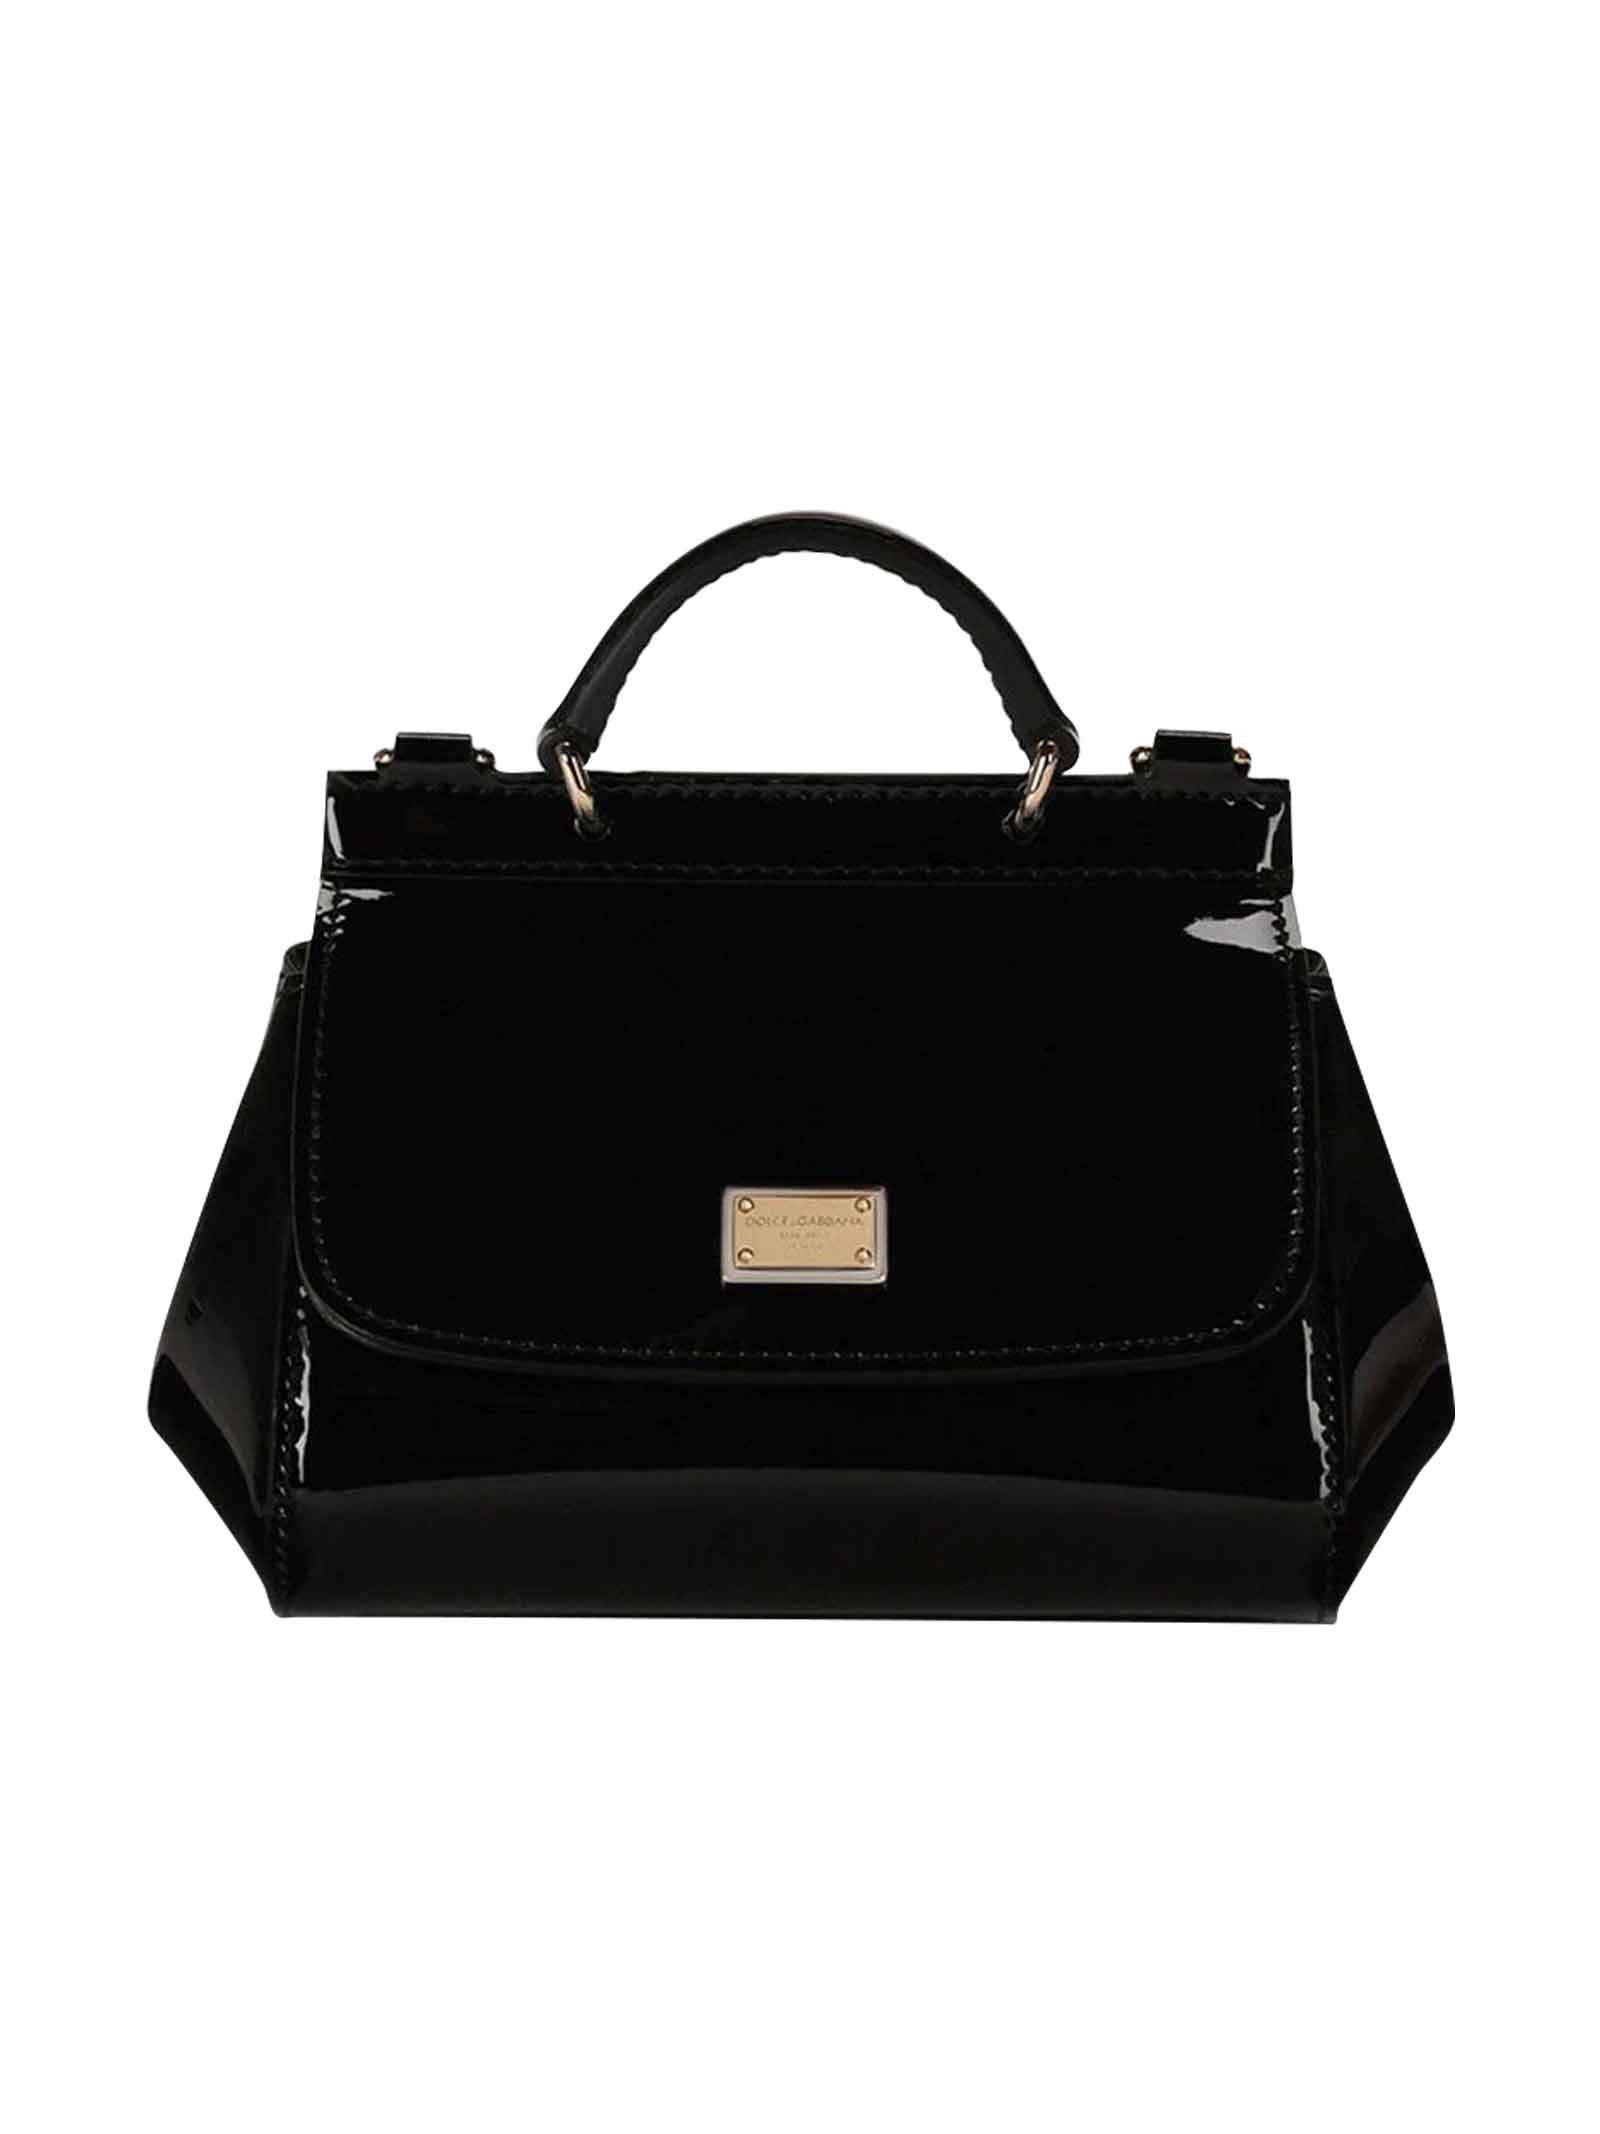 Dolce & Gabbana Black Tote Bag